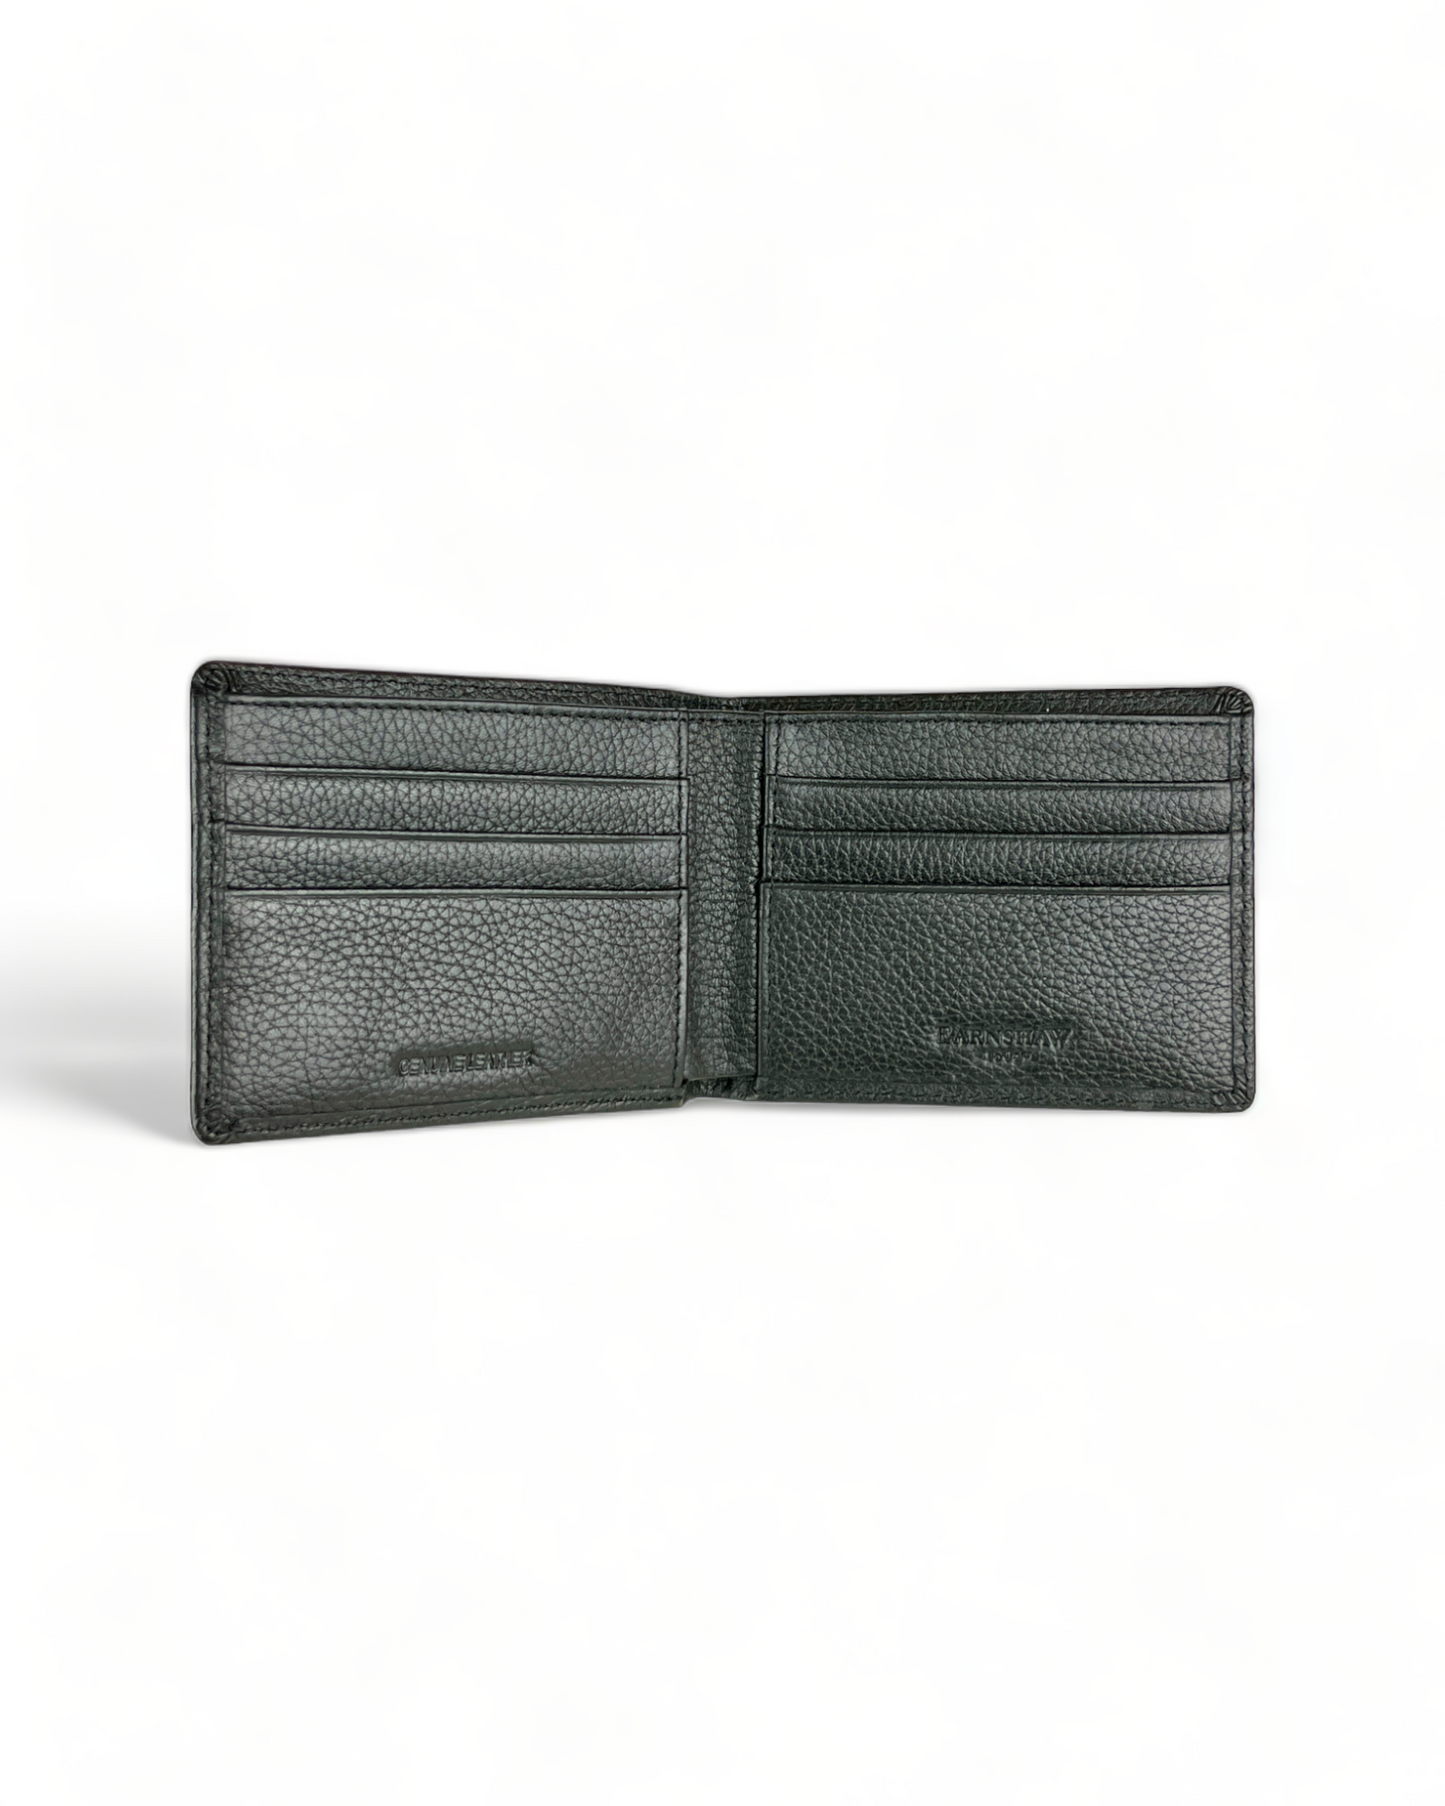 EarnshaW 1805 Black Wallet